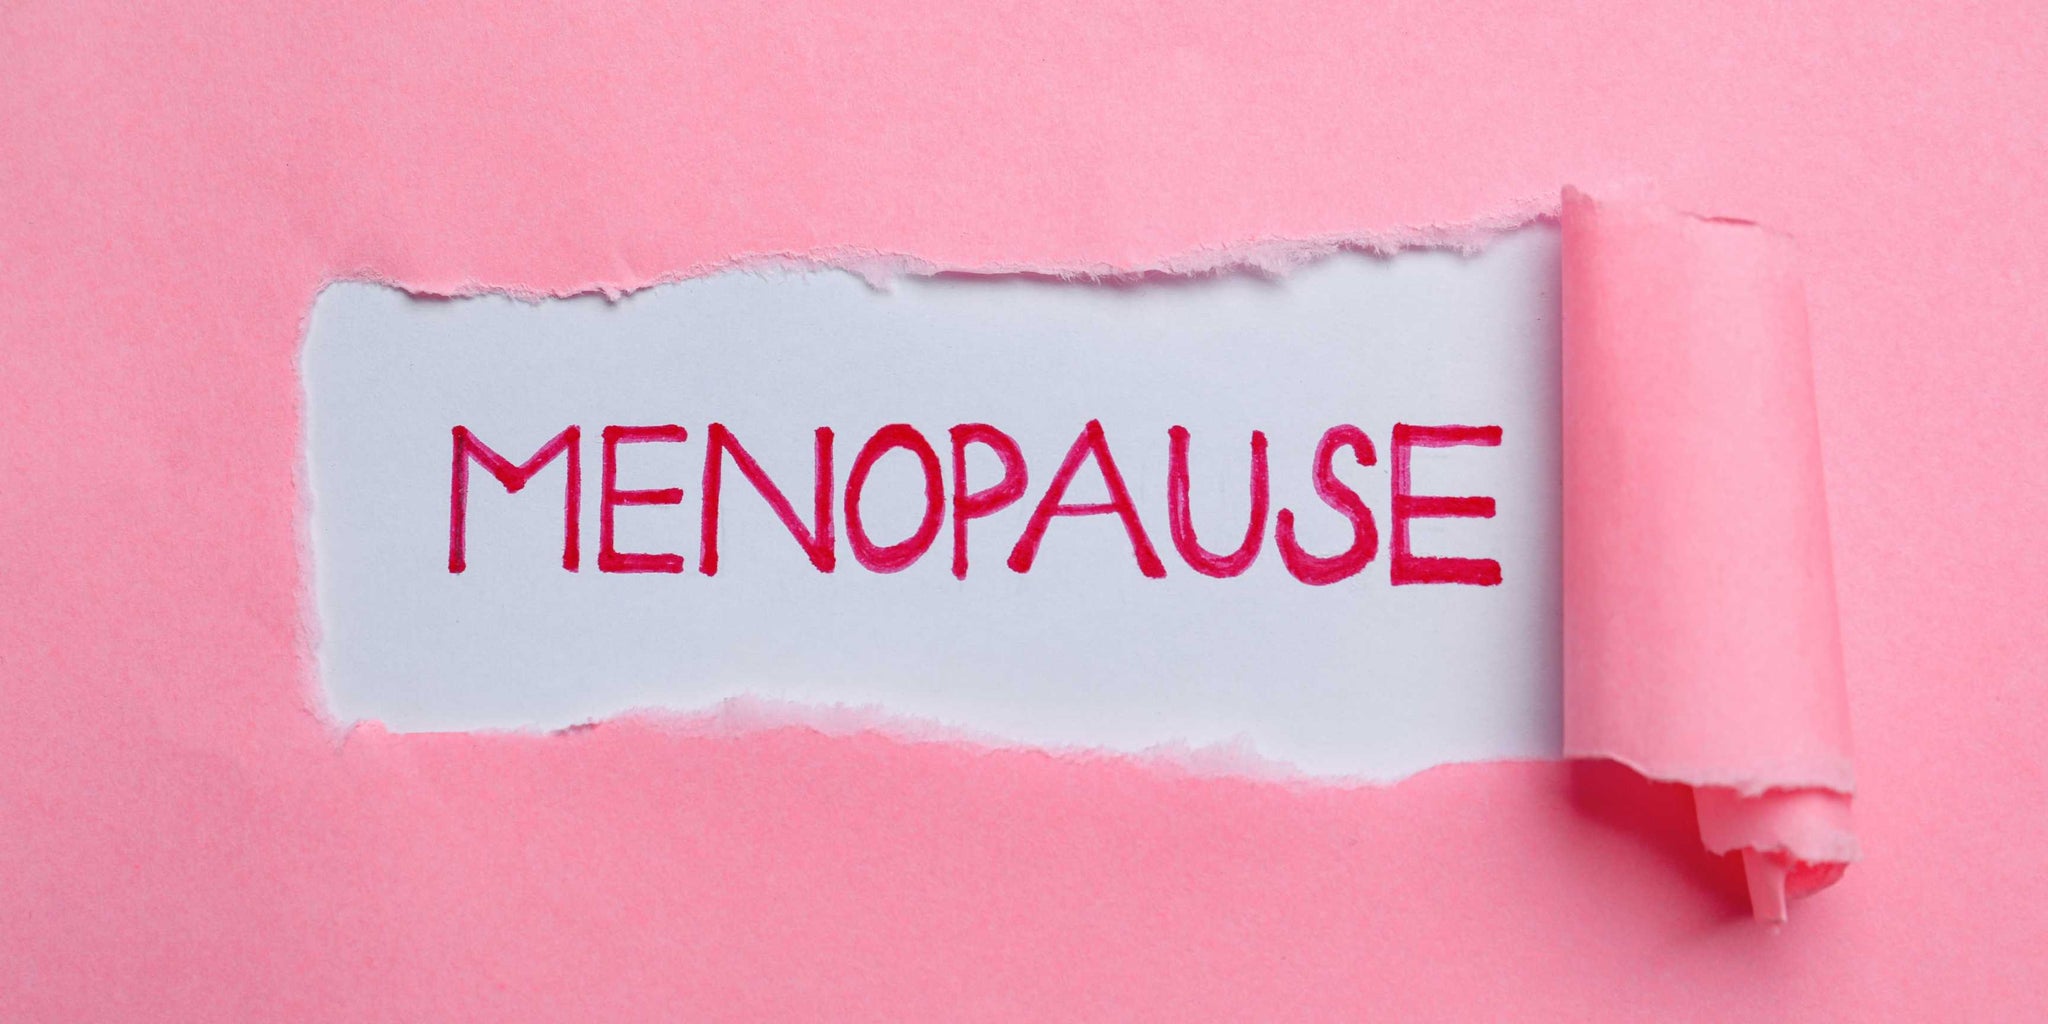 Surviving Menopause